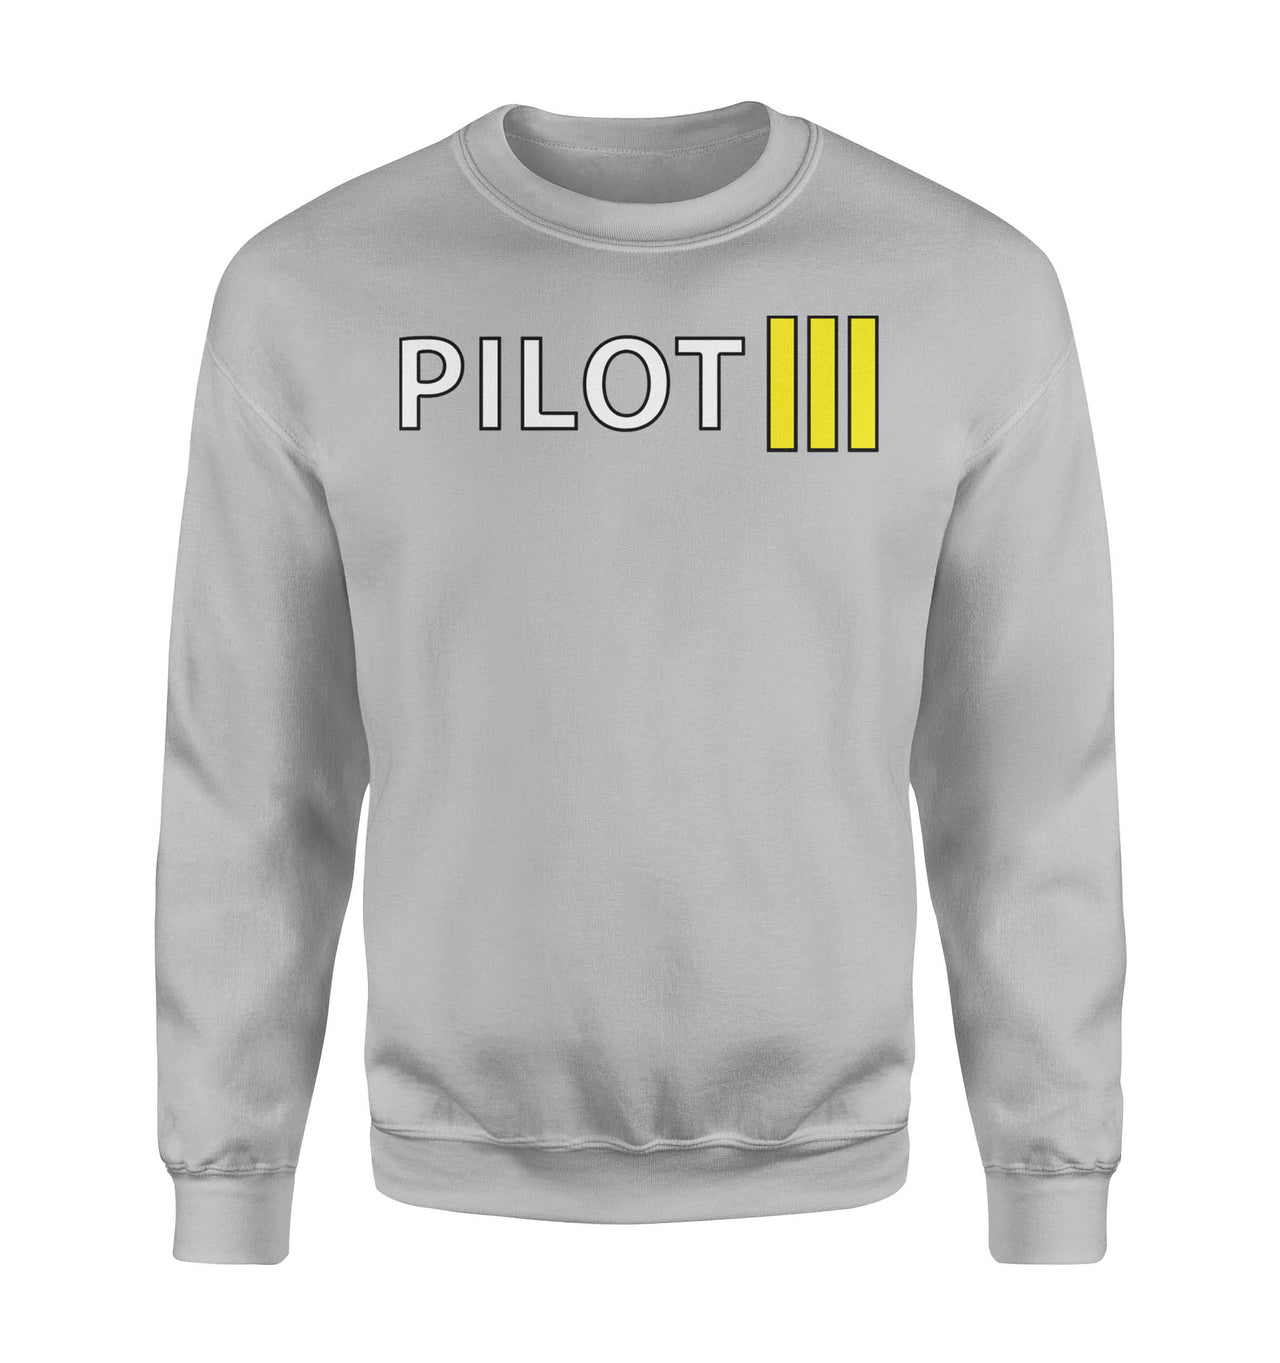 Pilot & Stripes (3 Lines) Designed Sweatshirts